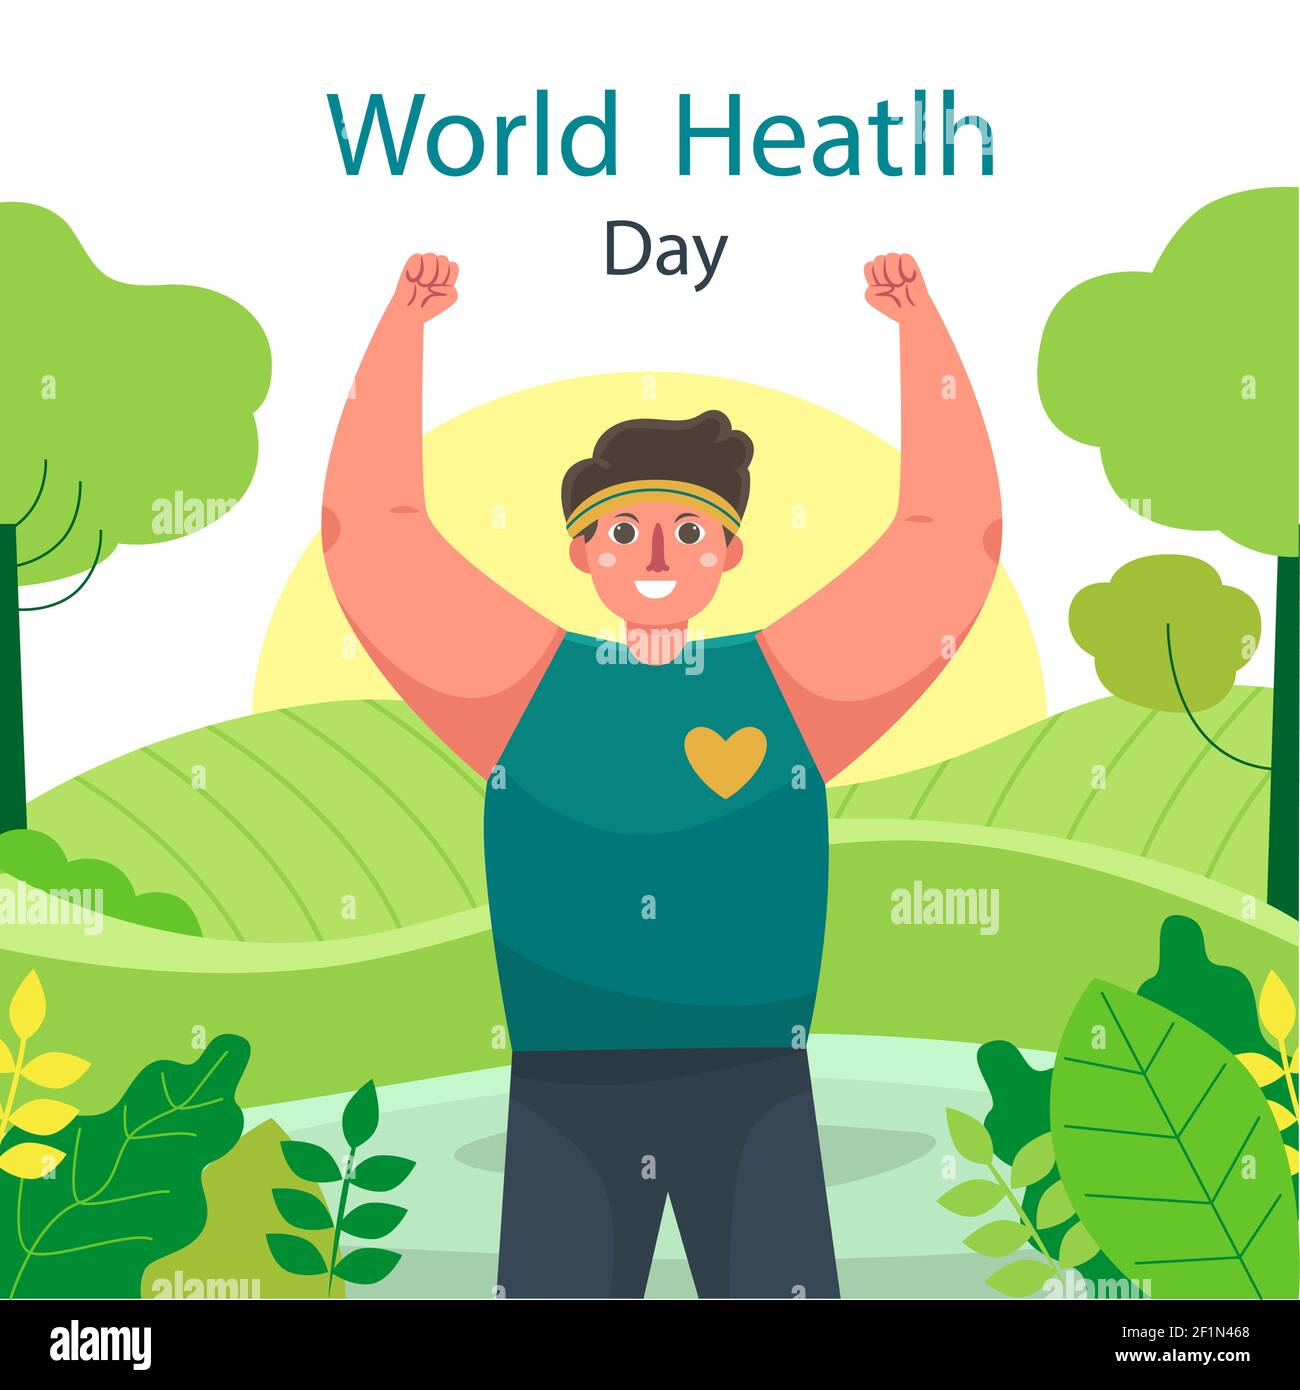 Hand drawn world health day illustration Vector illustration. Stock Vector